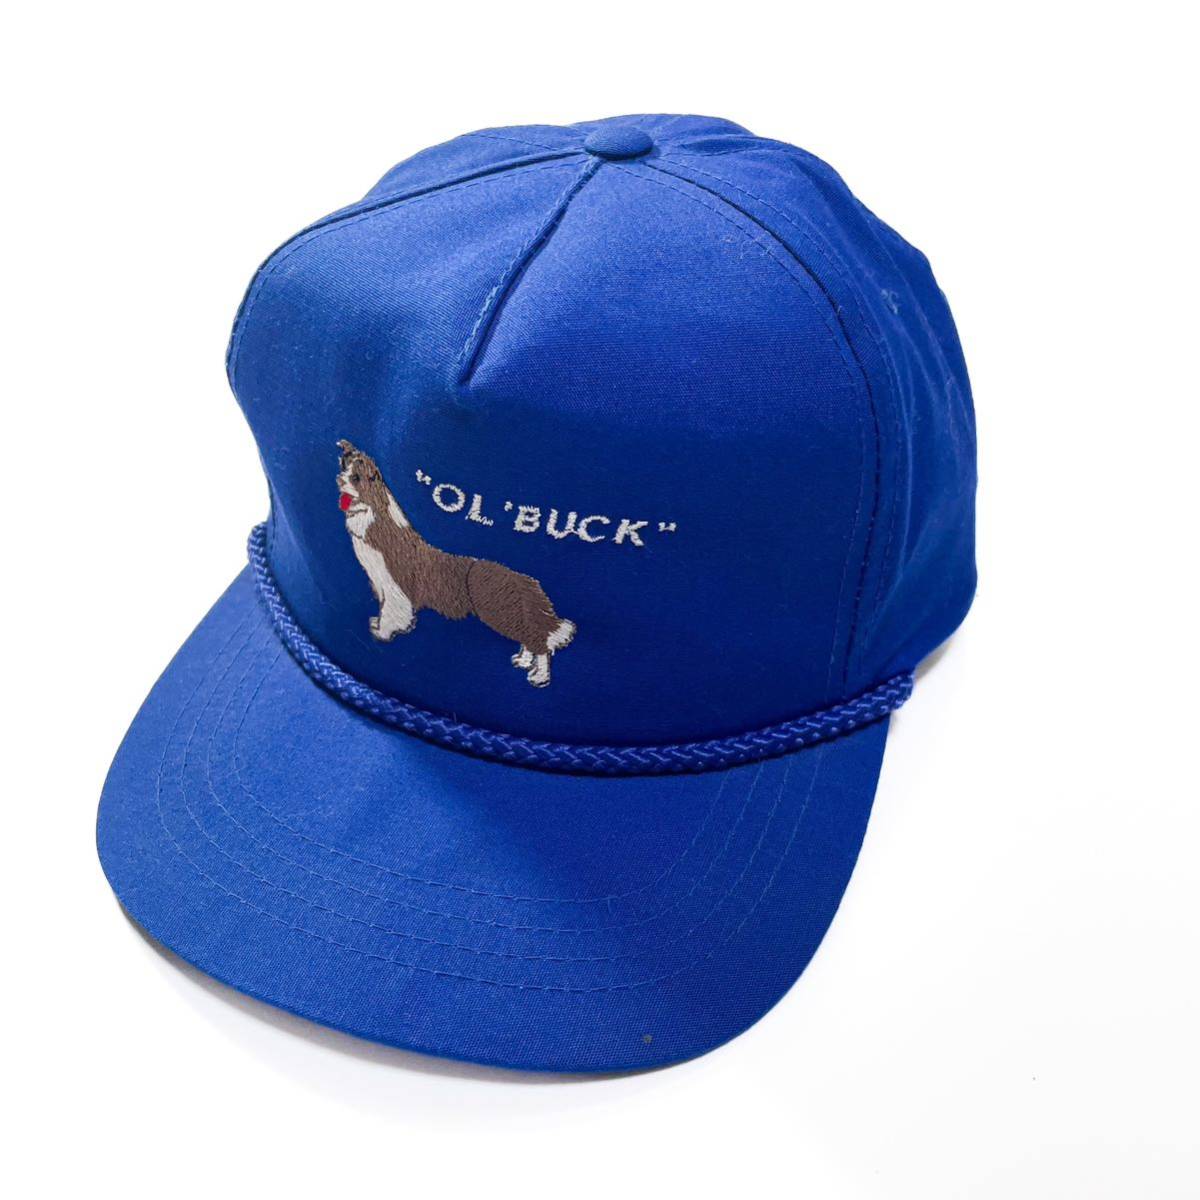 90s OL Buck 企業 キャップ 帽子 80s トラッカー ビンテージ usa old ブルー 刺繍 アメリカ ベースボール cap free 犬 動物 dog orvis